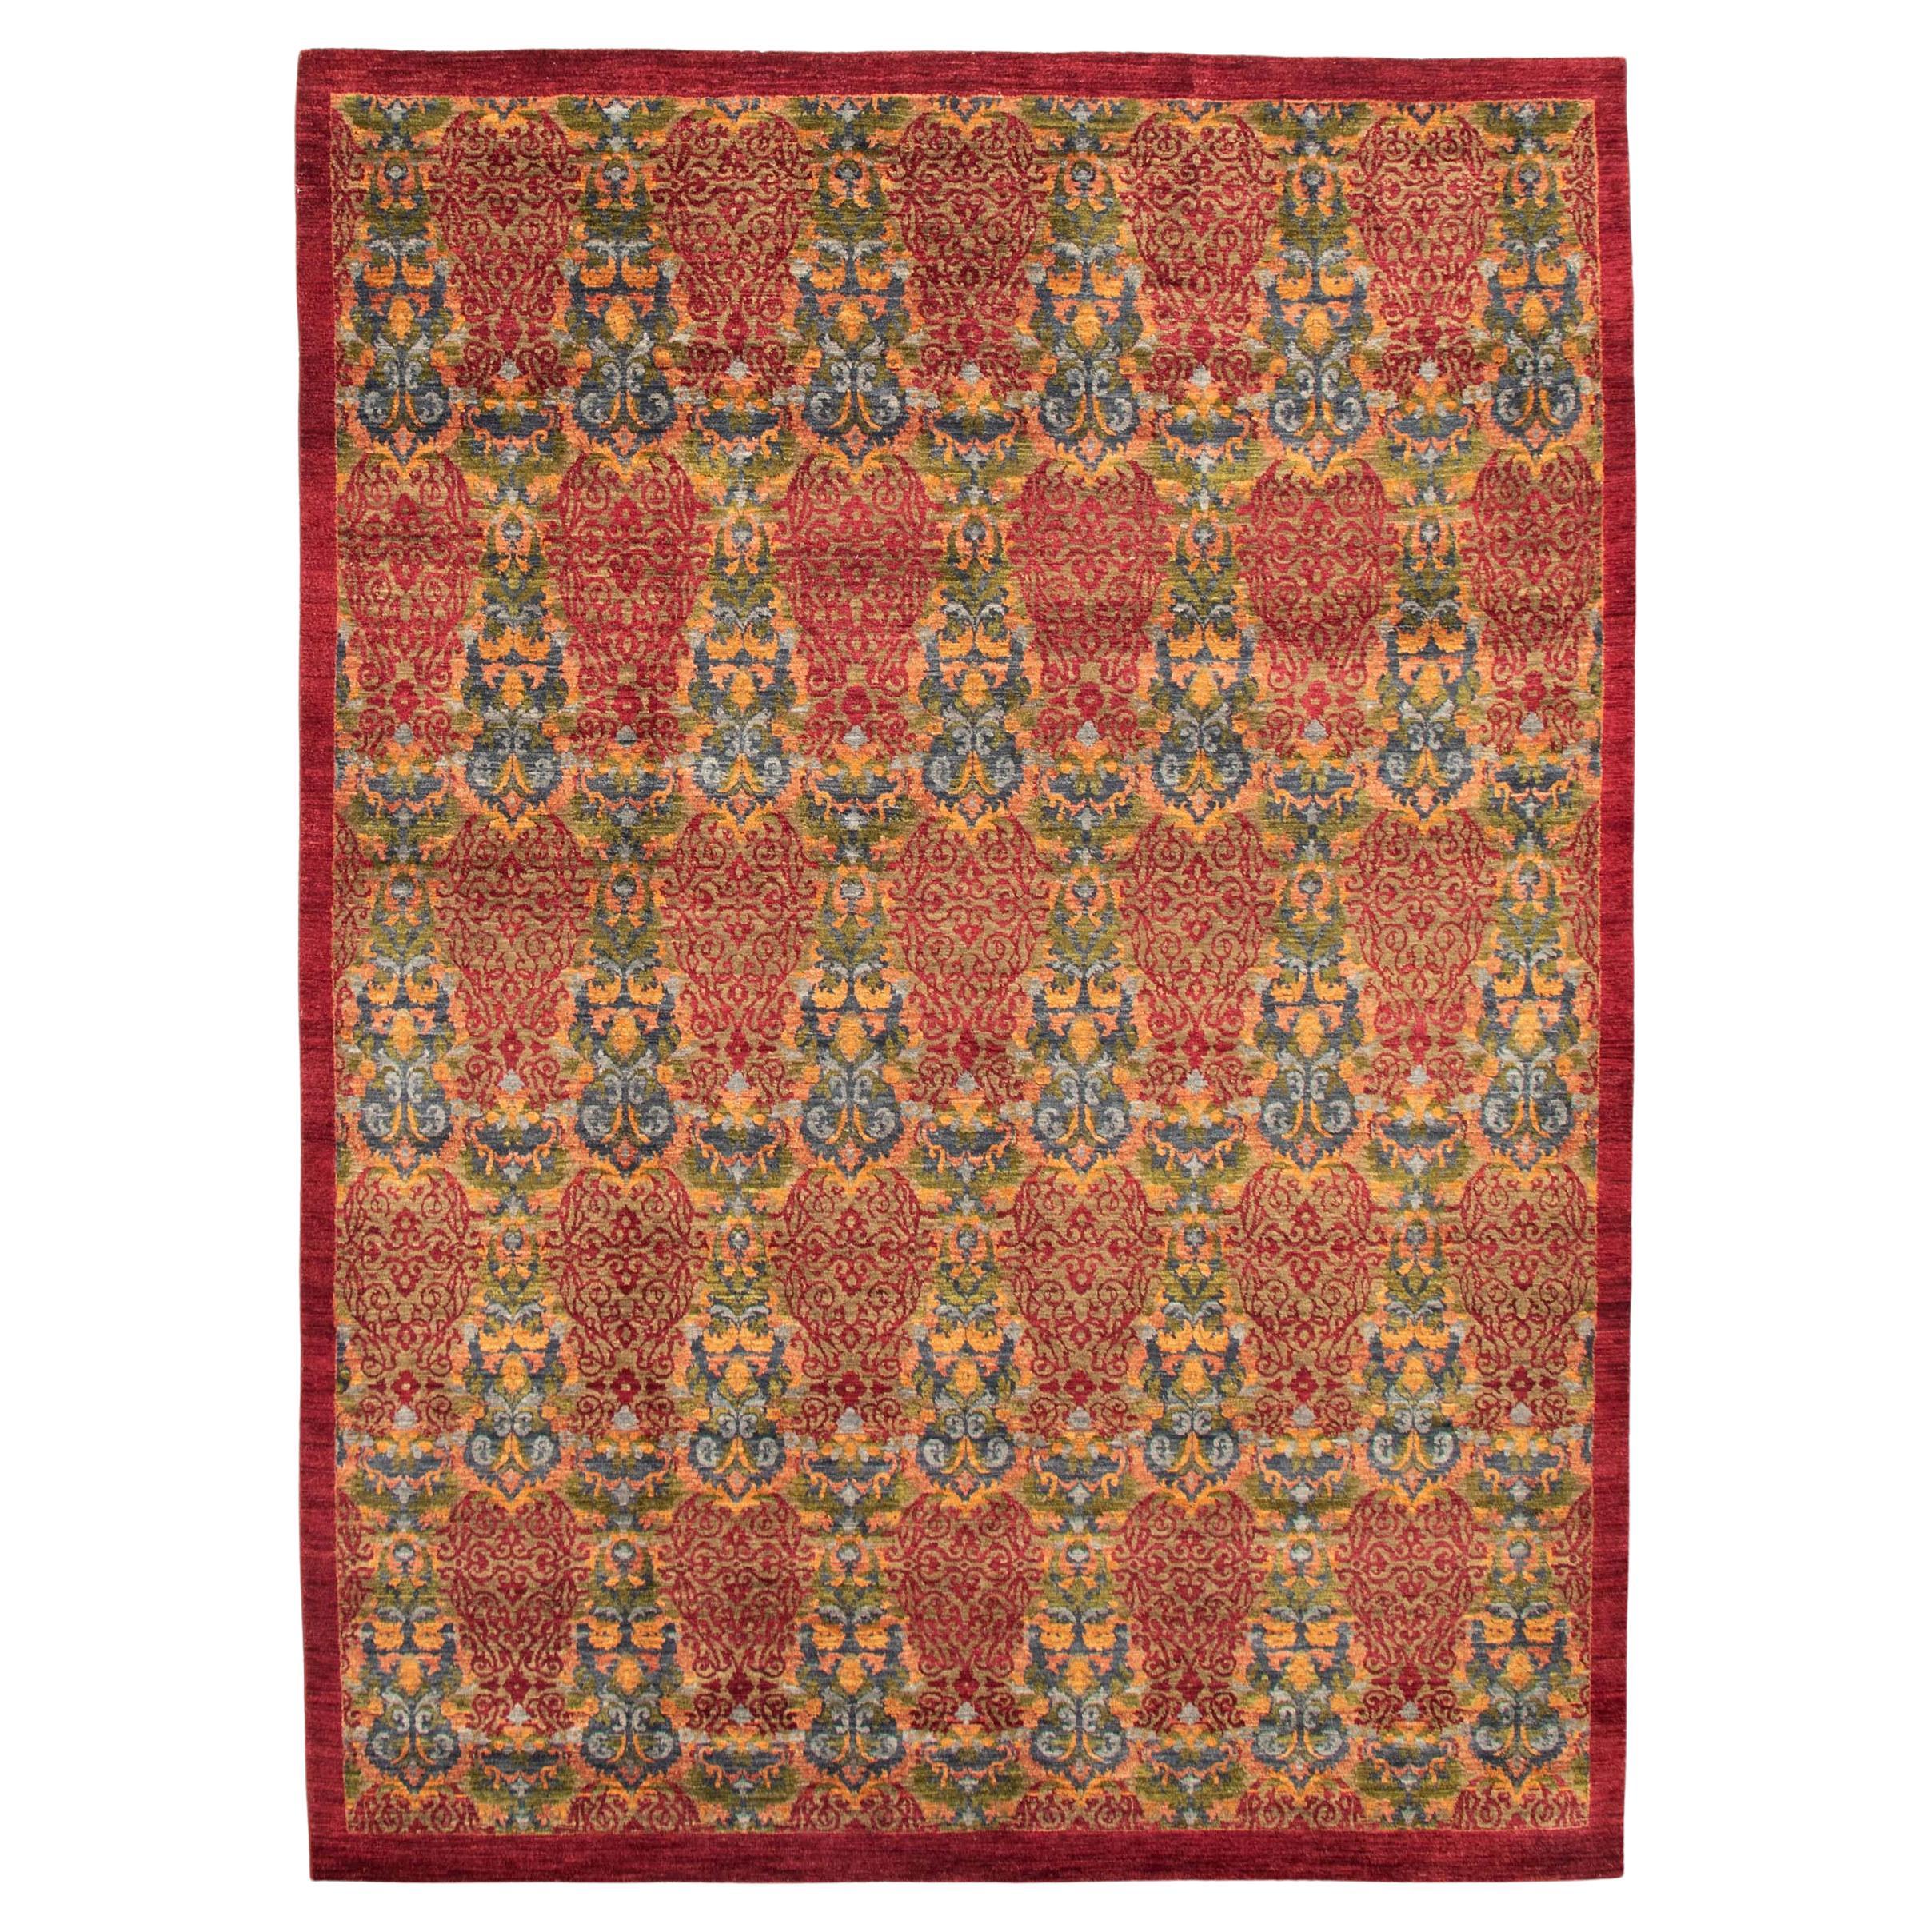 Lahore Carpet, Transitional, Colorful, 8’ x 10’